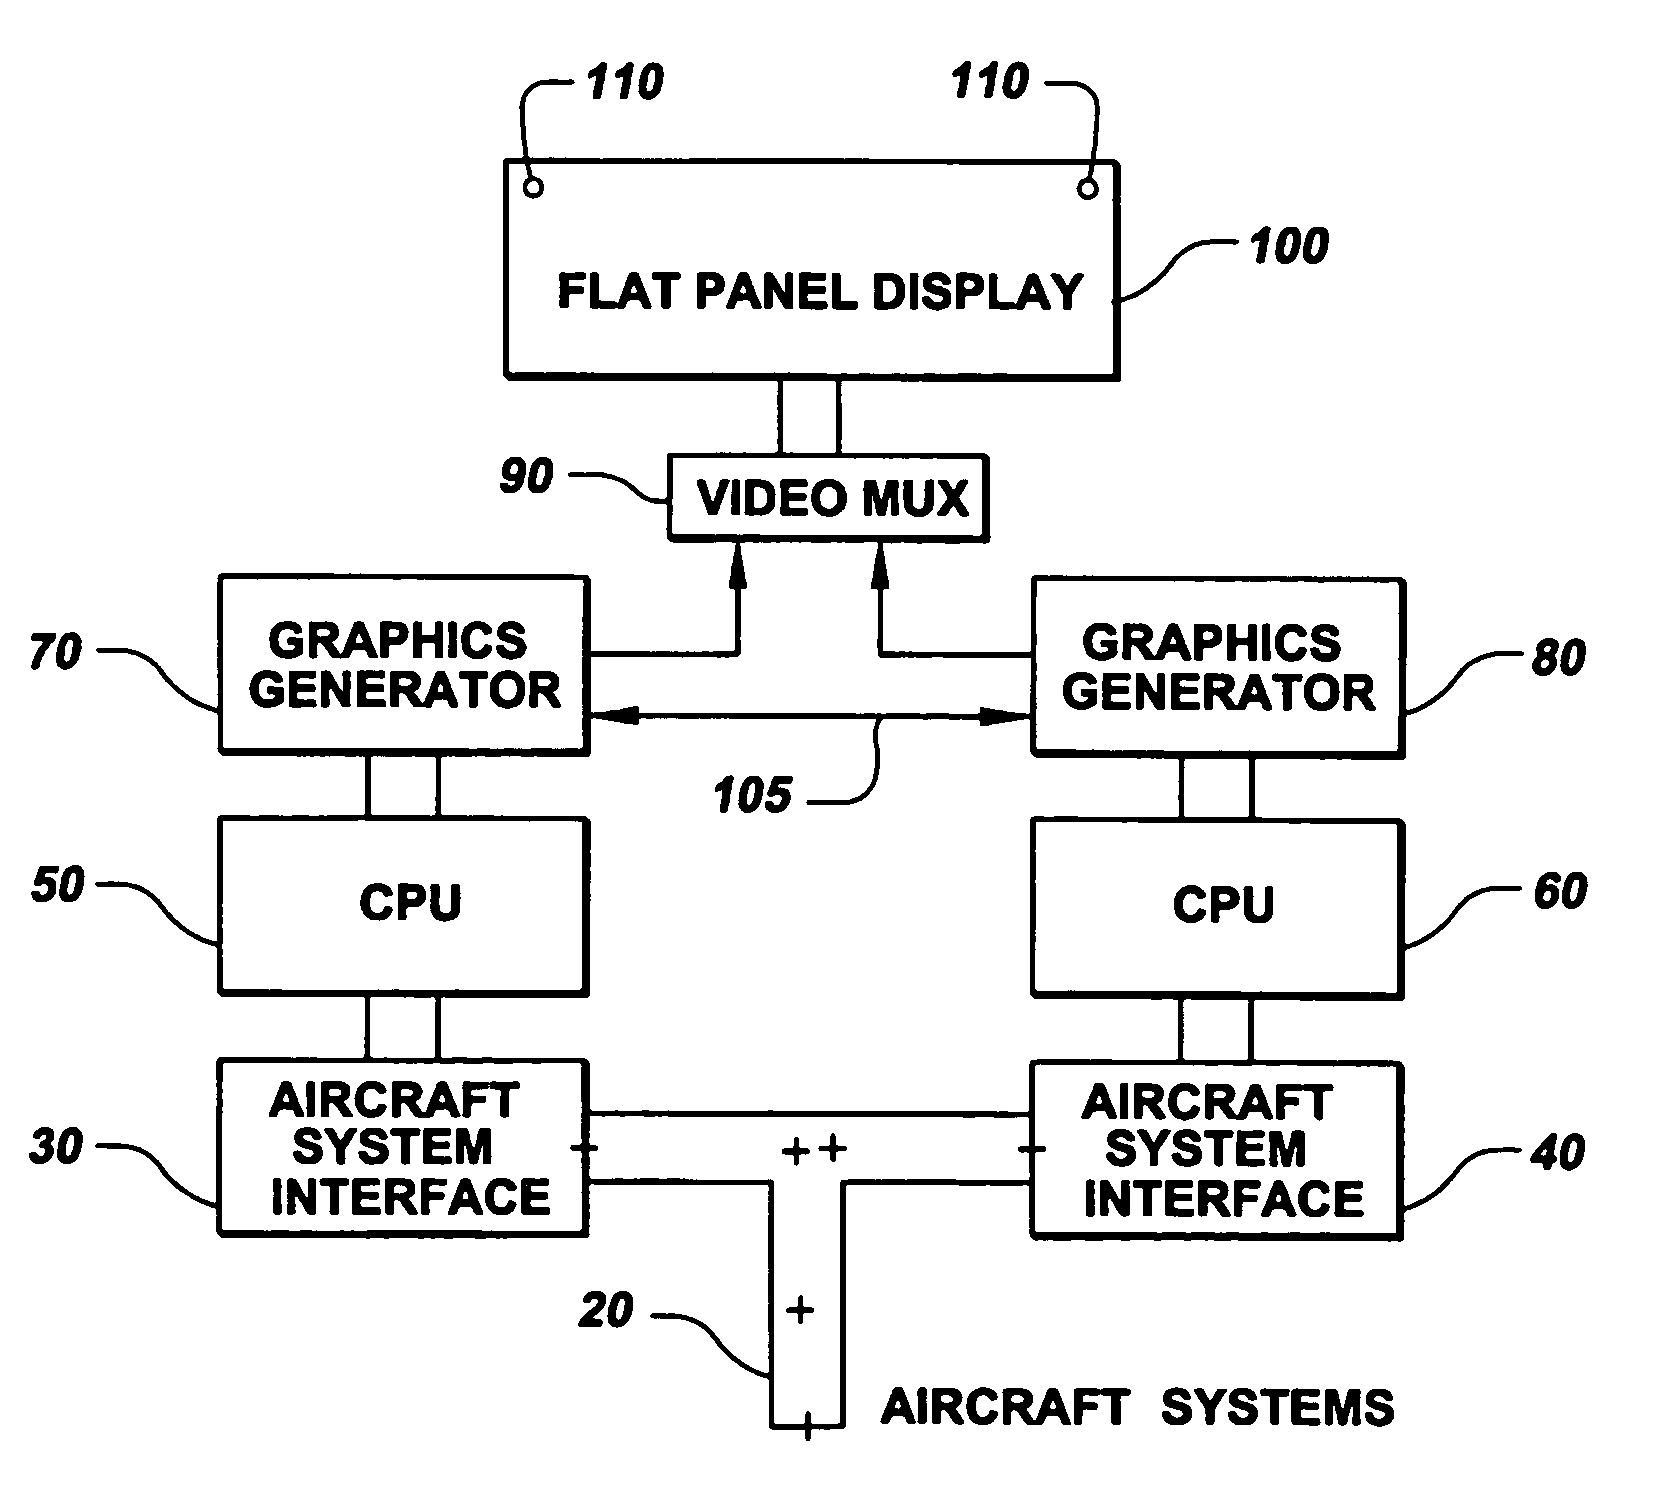 Flat panel display using dual CPU's for an aircraft cockpit